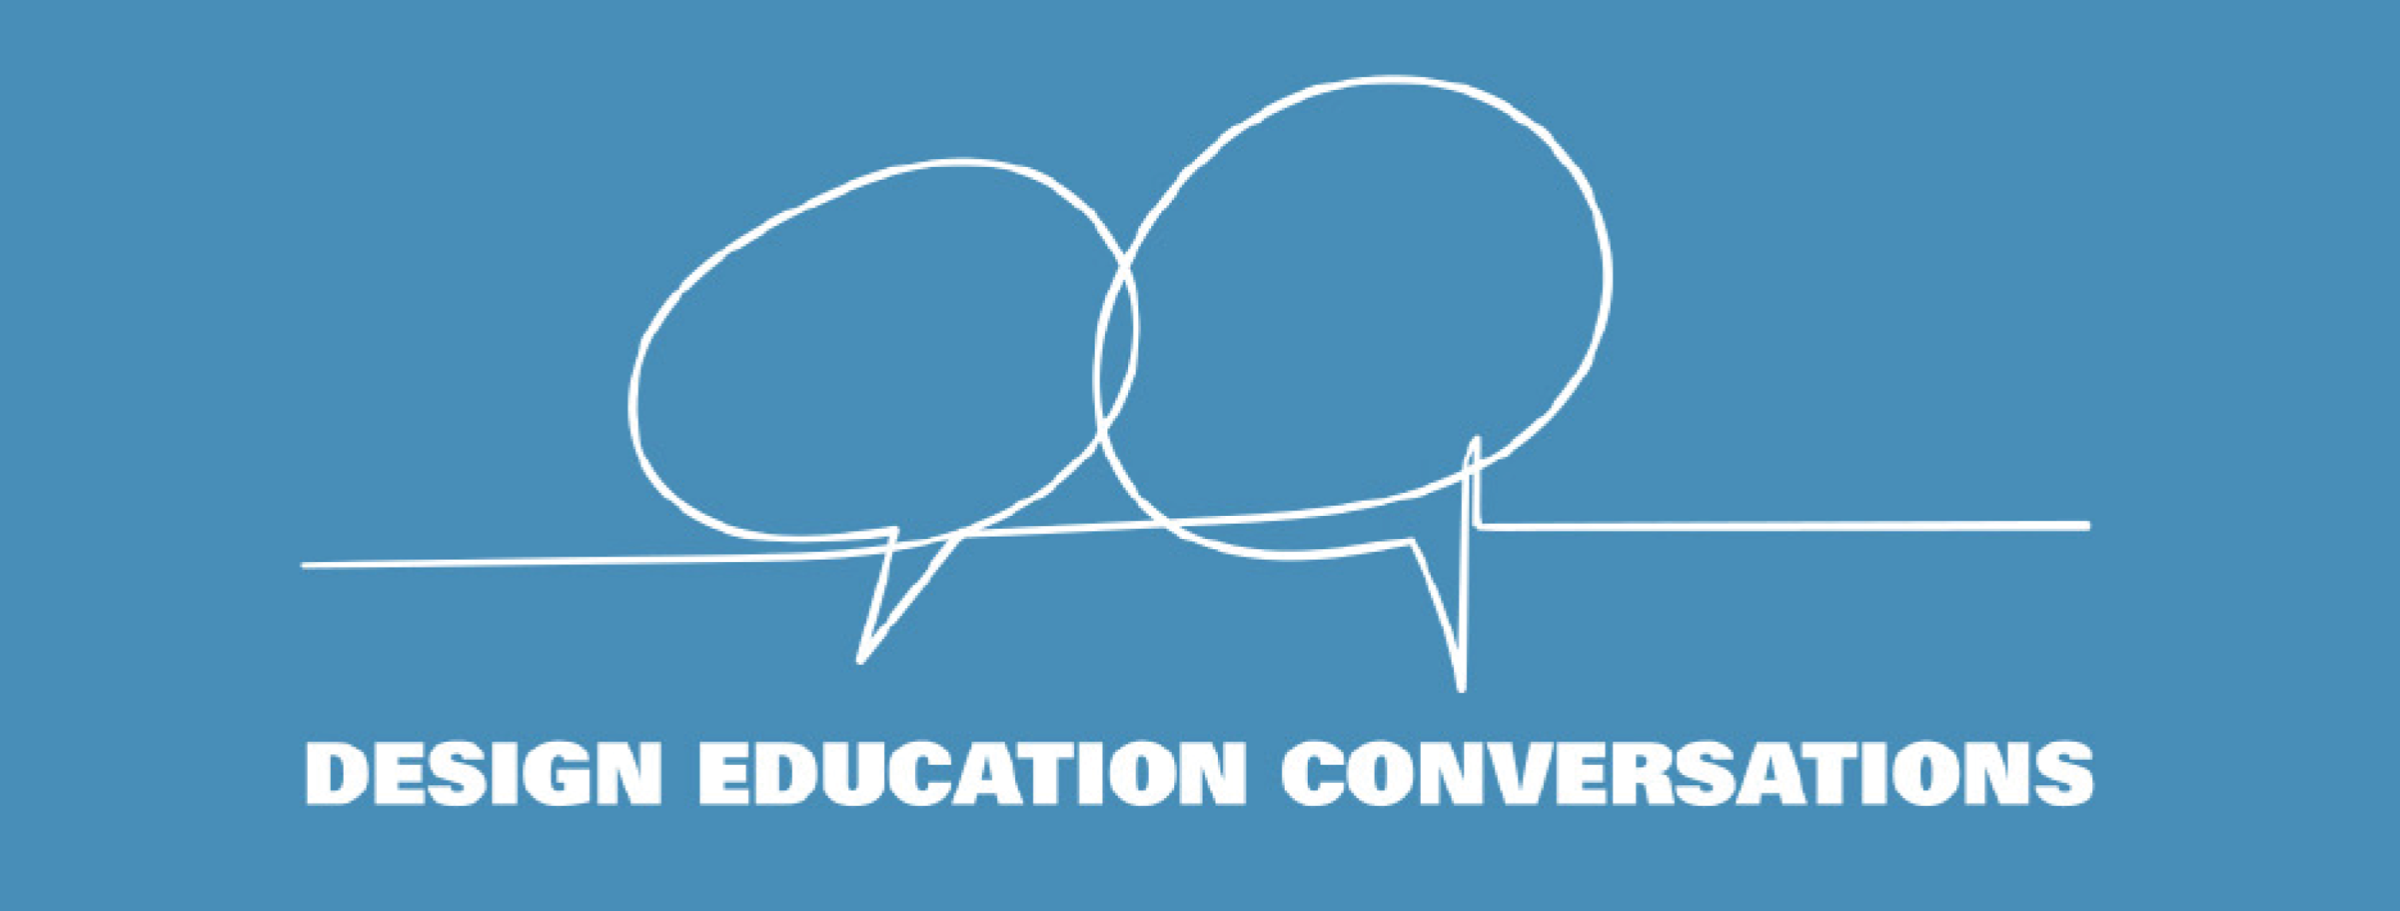 Design Education Conversations Graphic